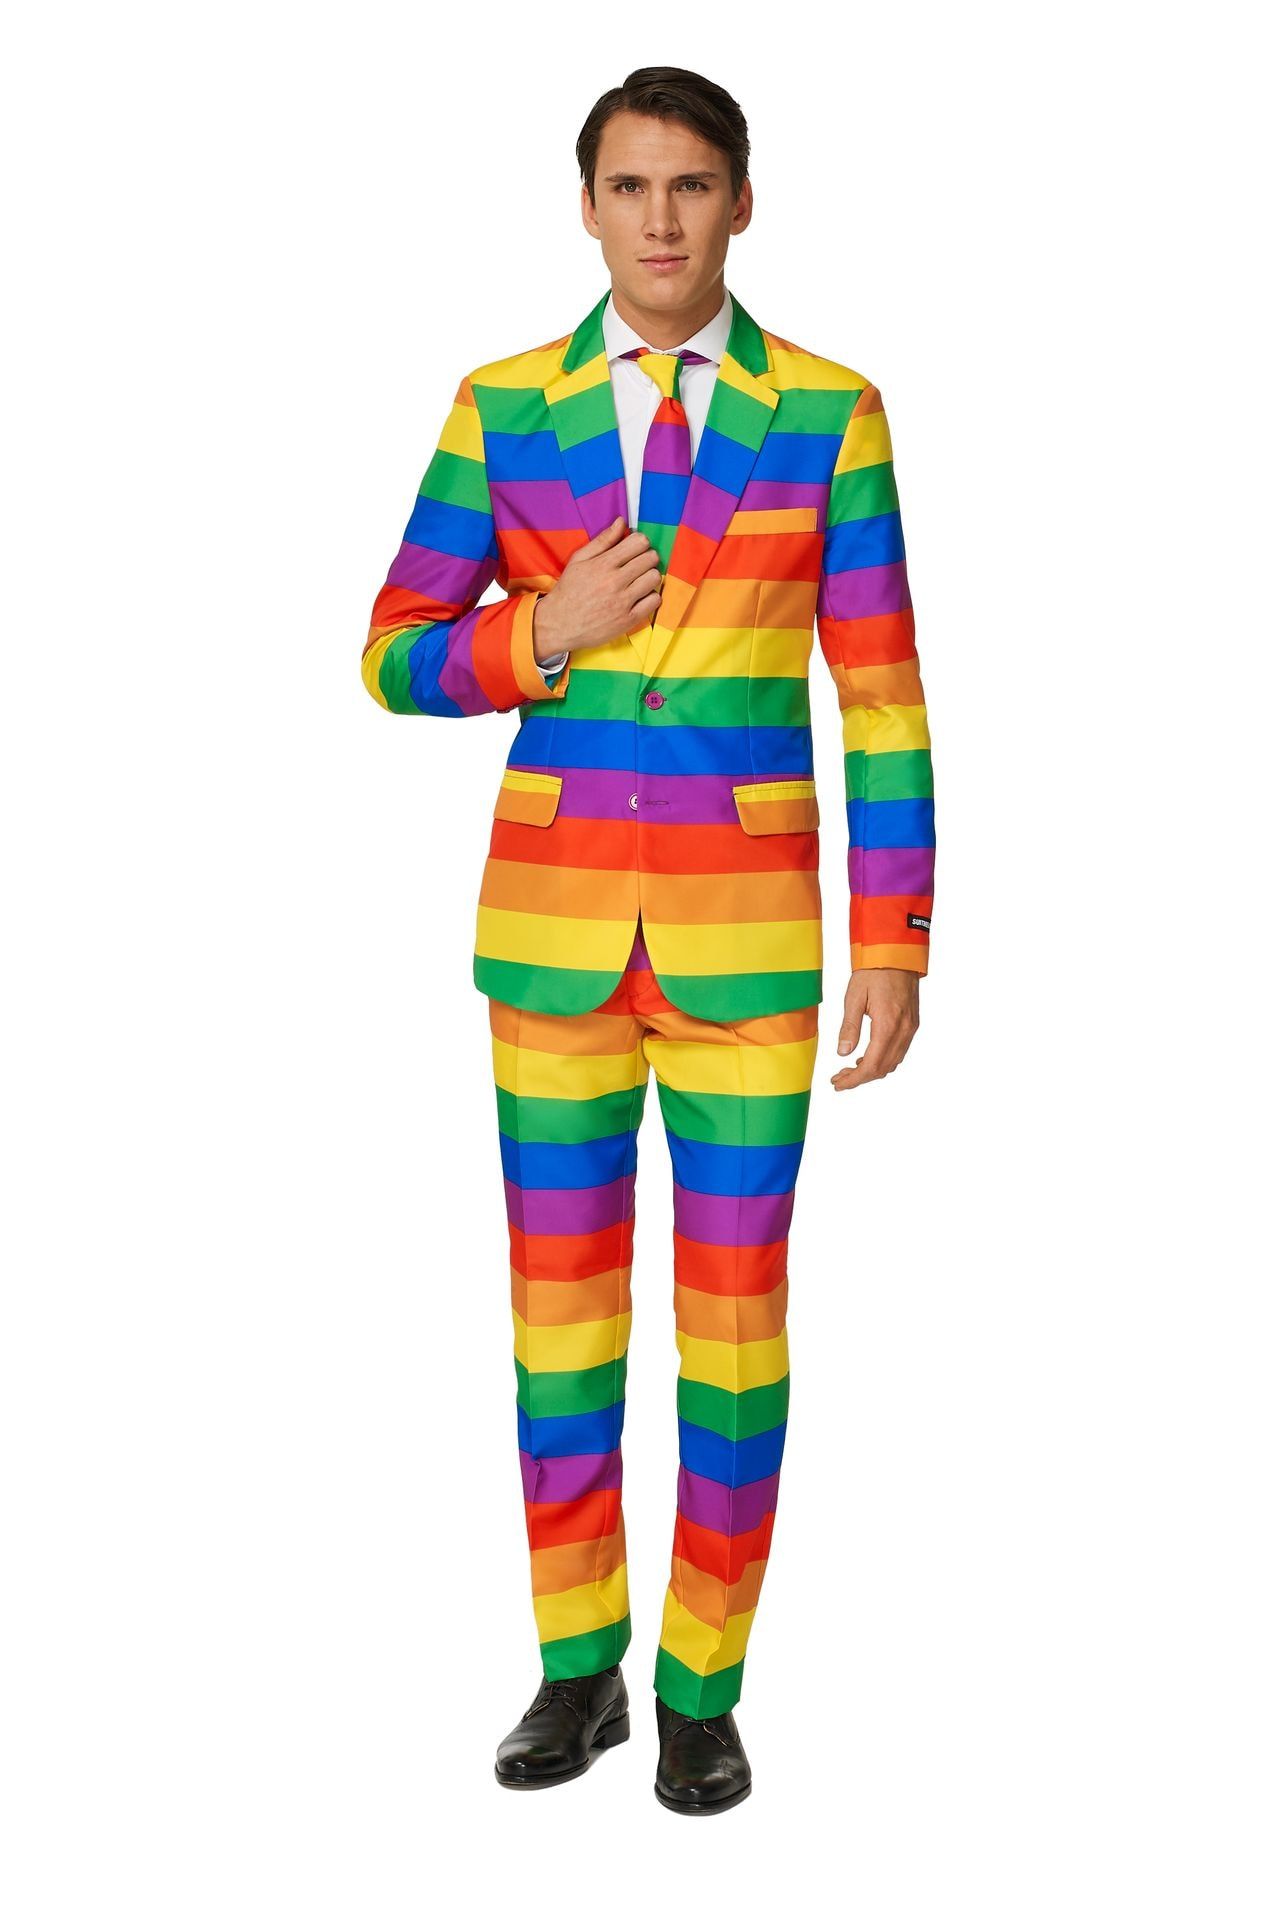 Regenboog Suitmeister kostuum